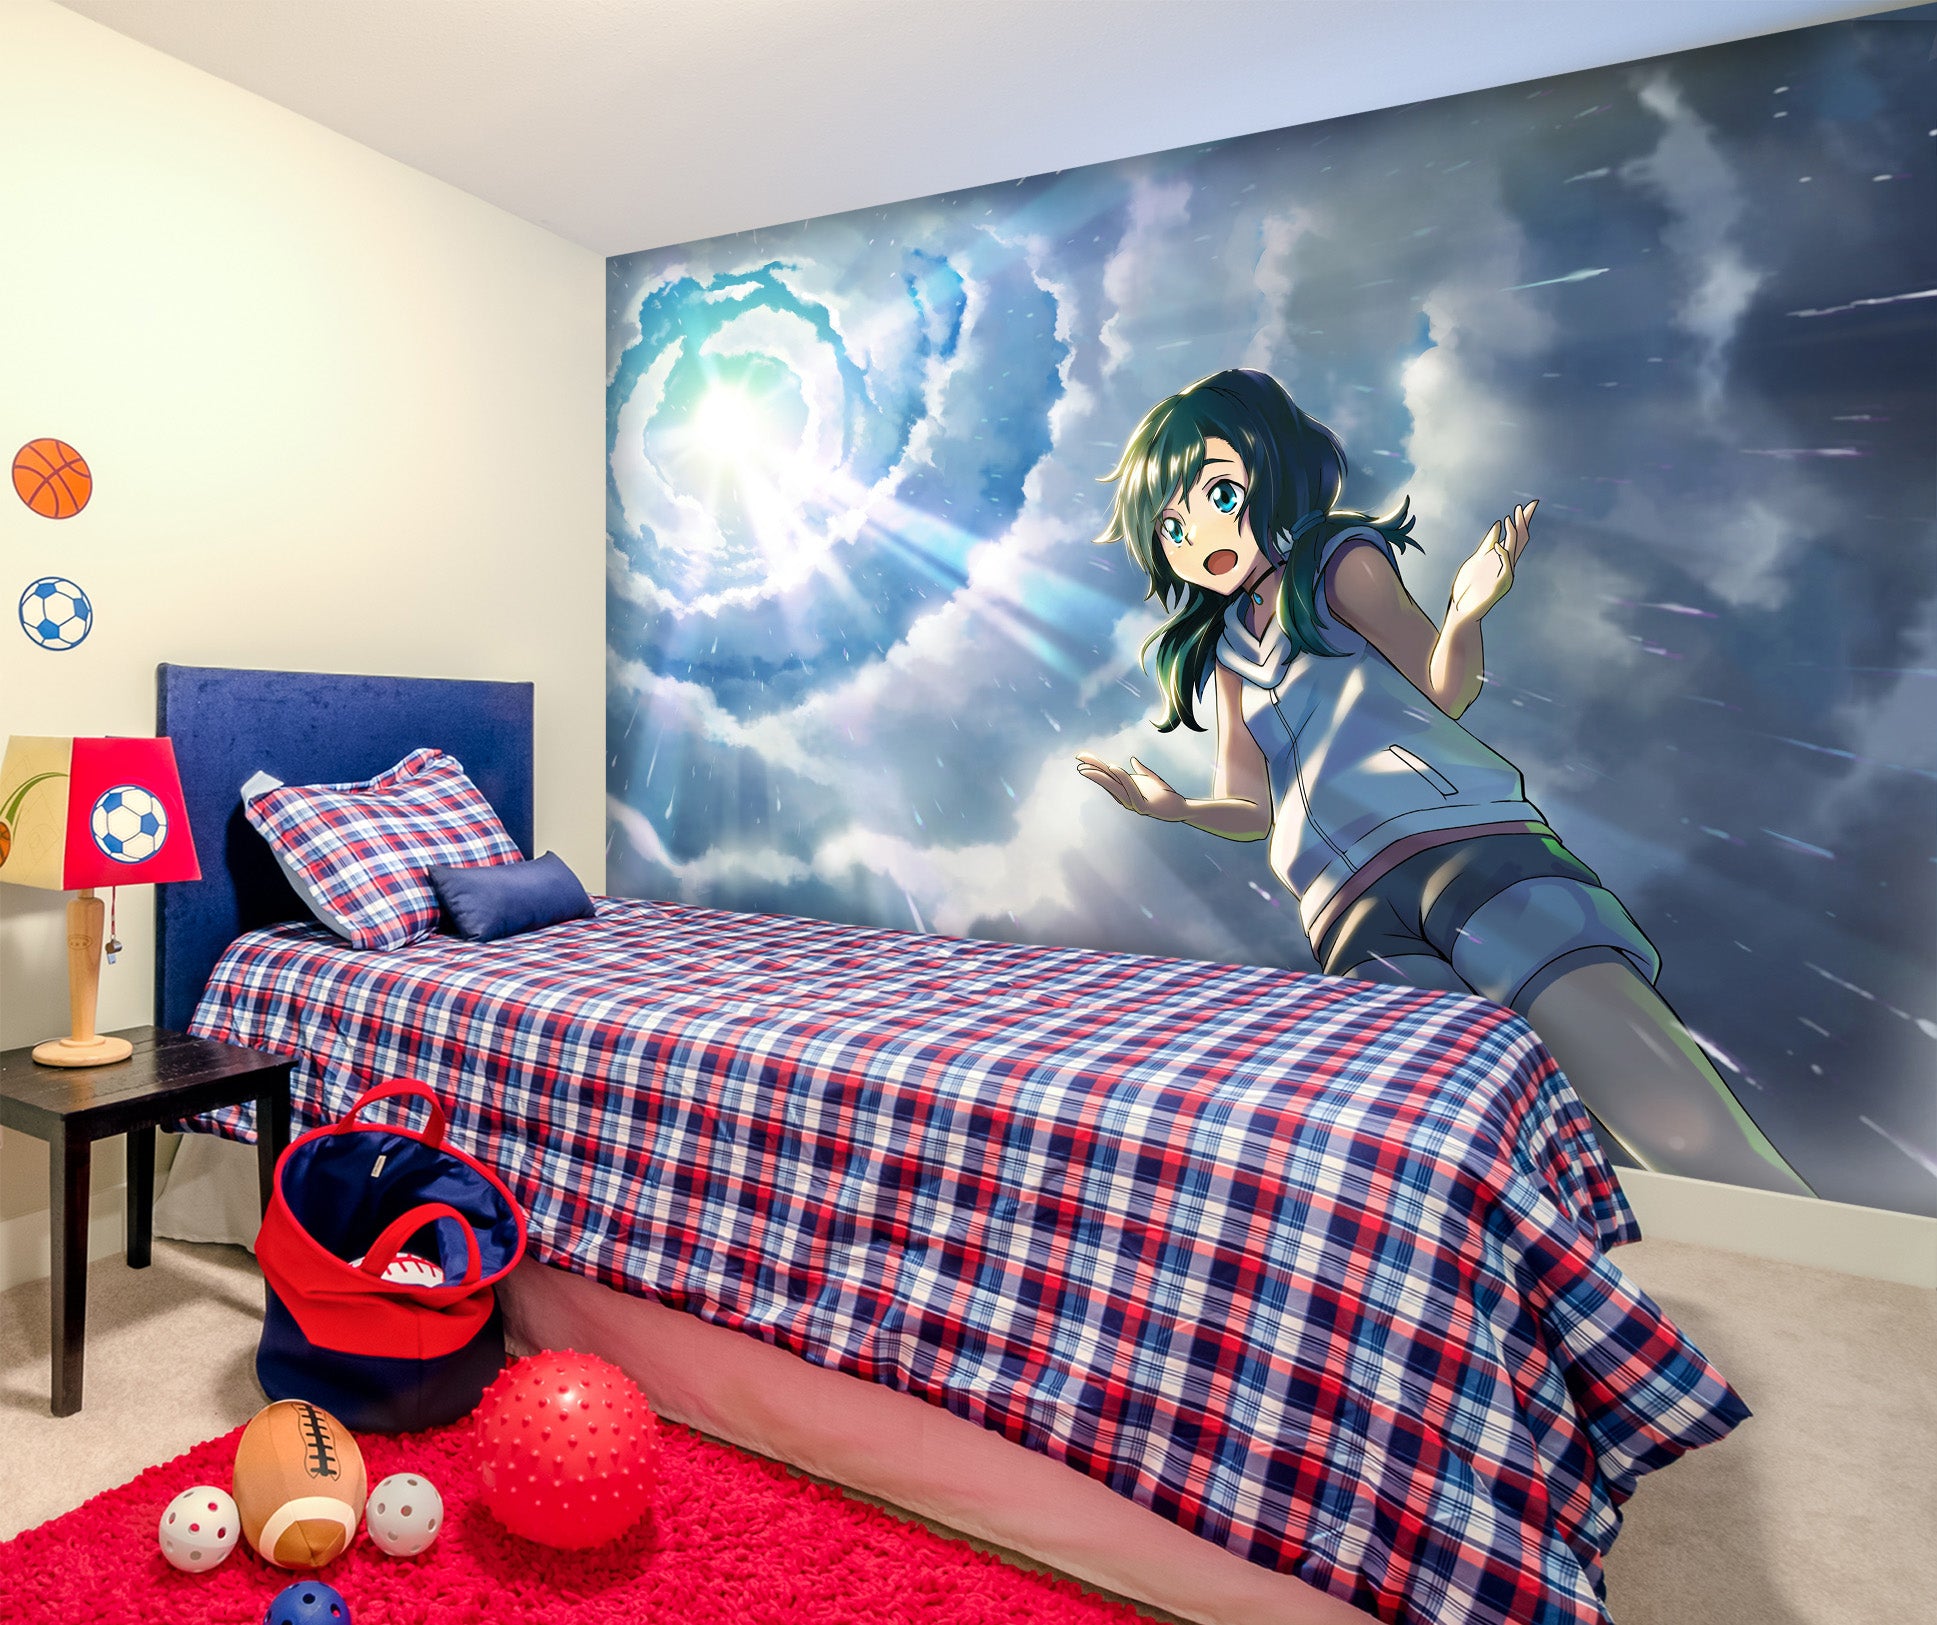 Bedroom Anime Wall - HOME DECOR INTERIOR DESIGN